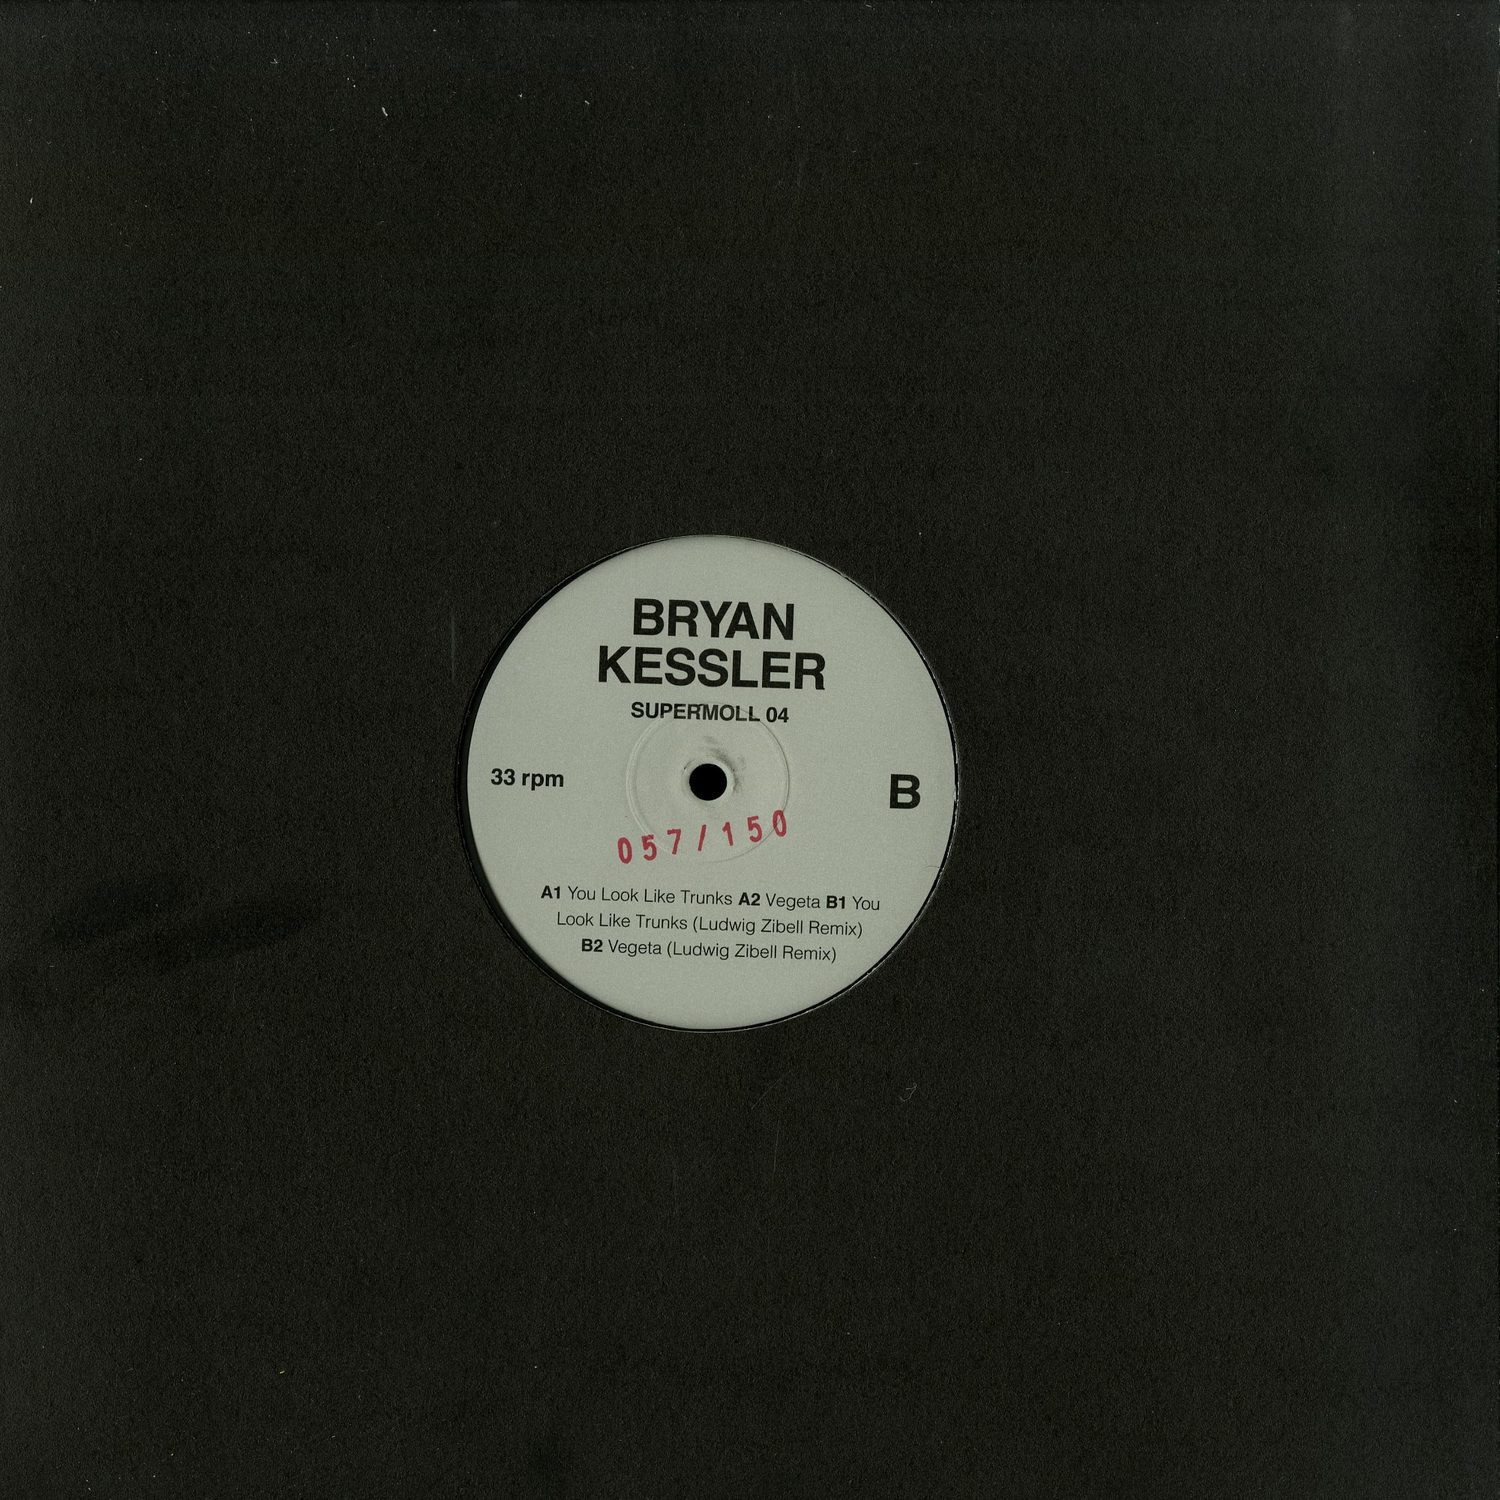 Bryan Kessler - SUPERMOLL 04